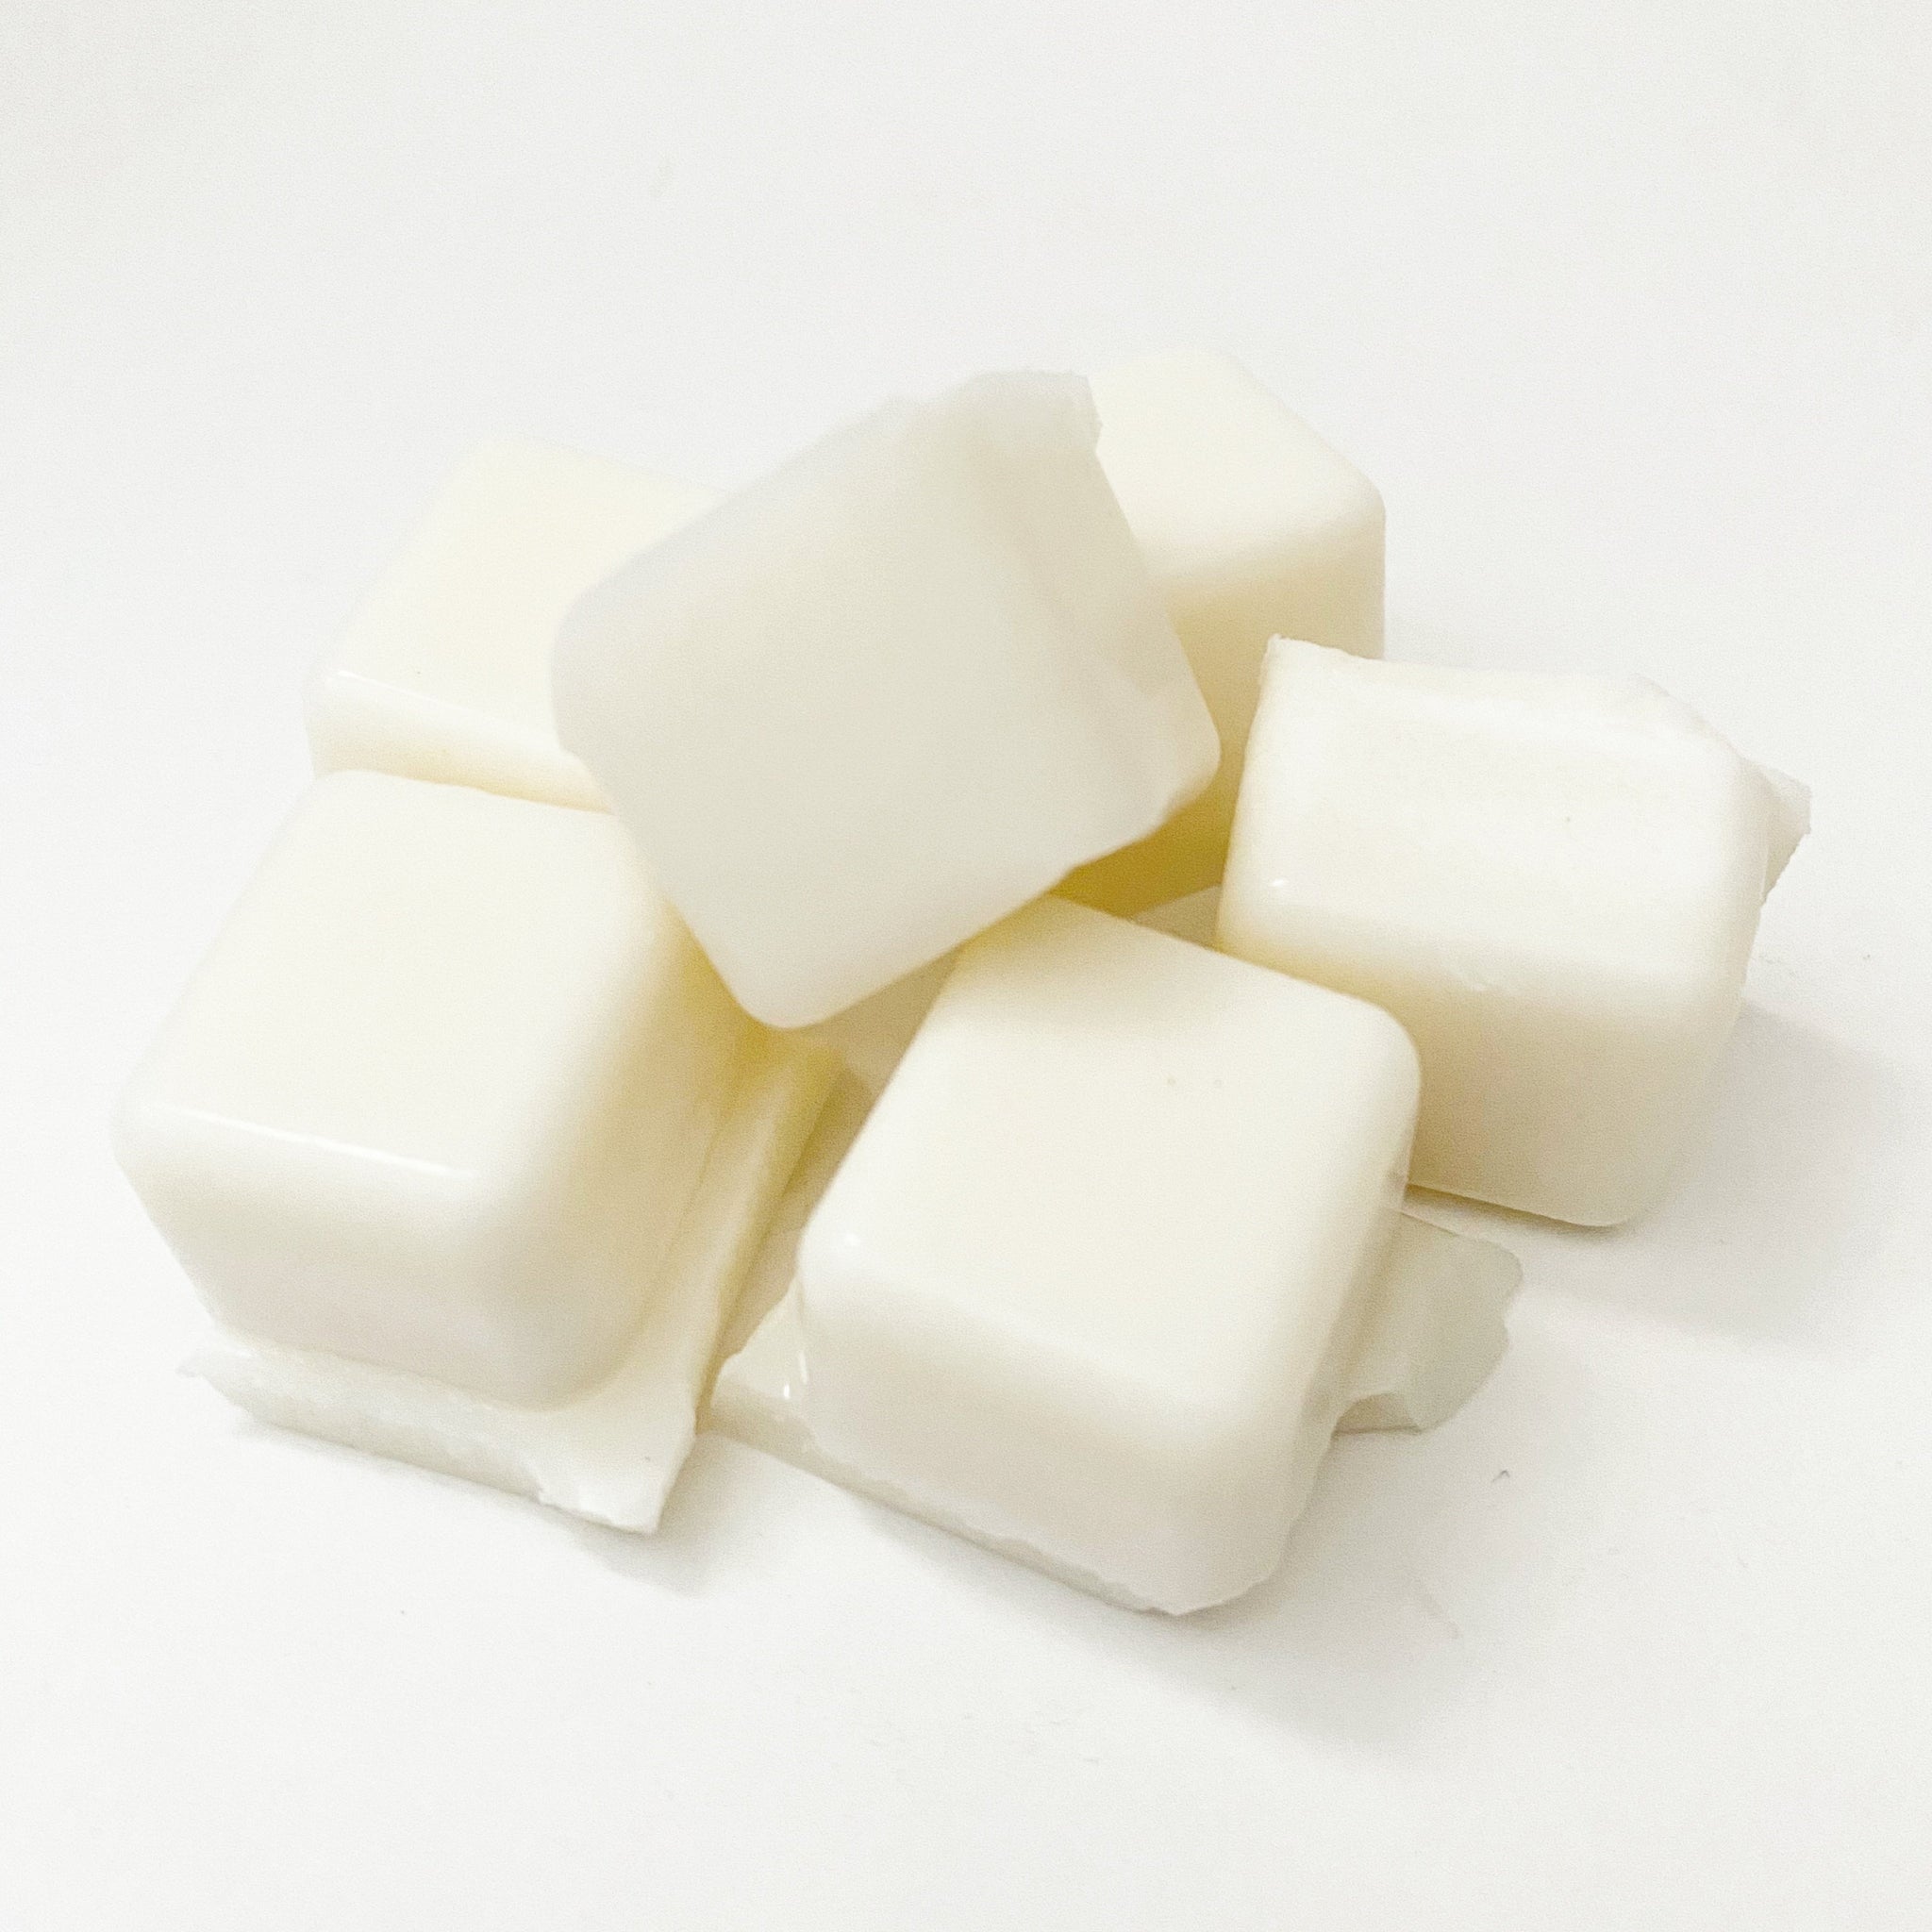 Warm Vanilla Sugar Soy Wax Melts - The Urban Scent